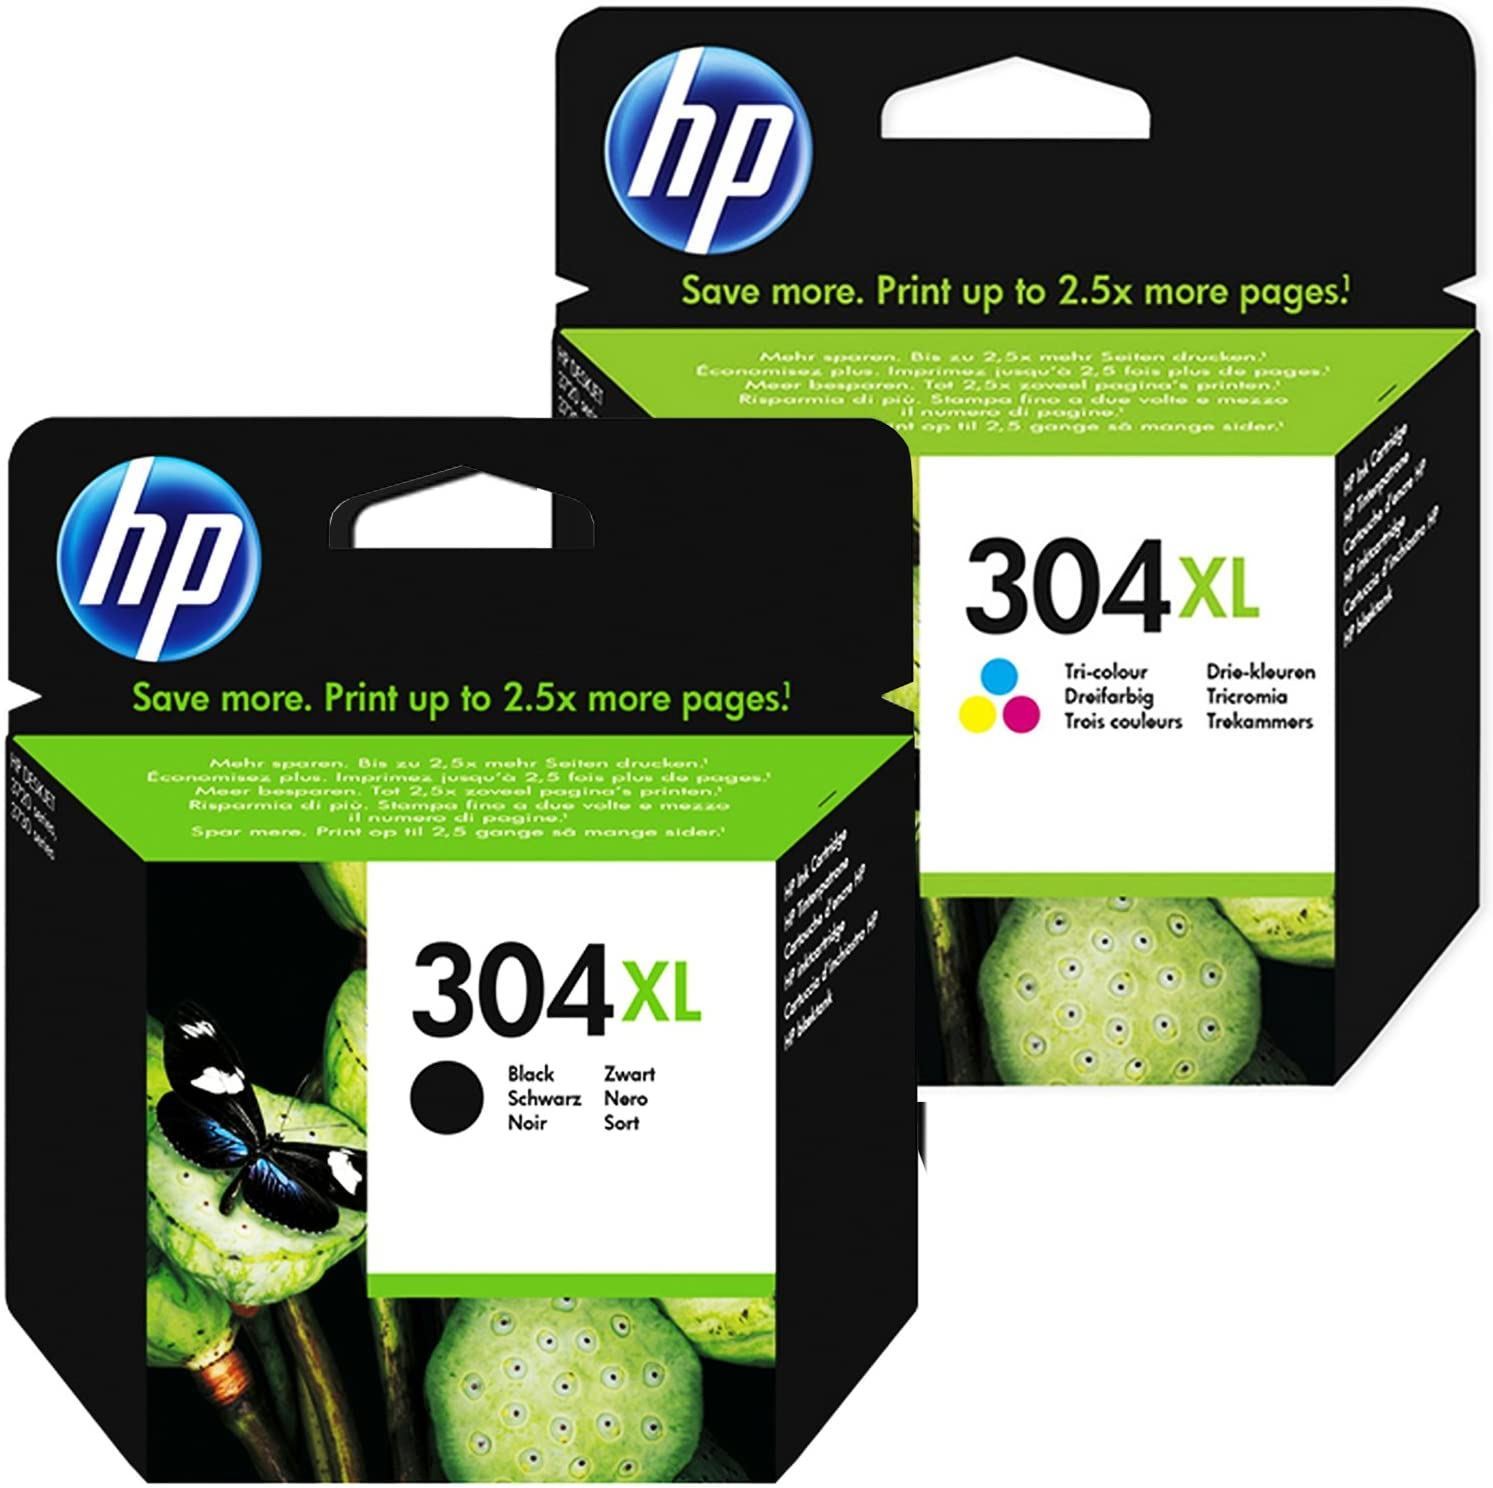 HP 304XL Black & Colour Original Ink Cartridge Combo Pack